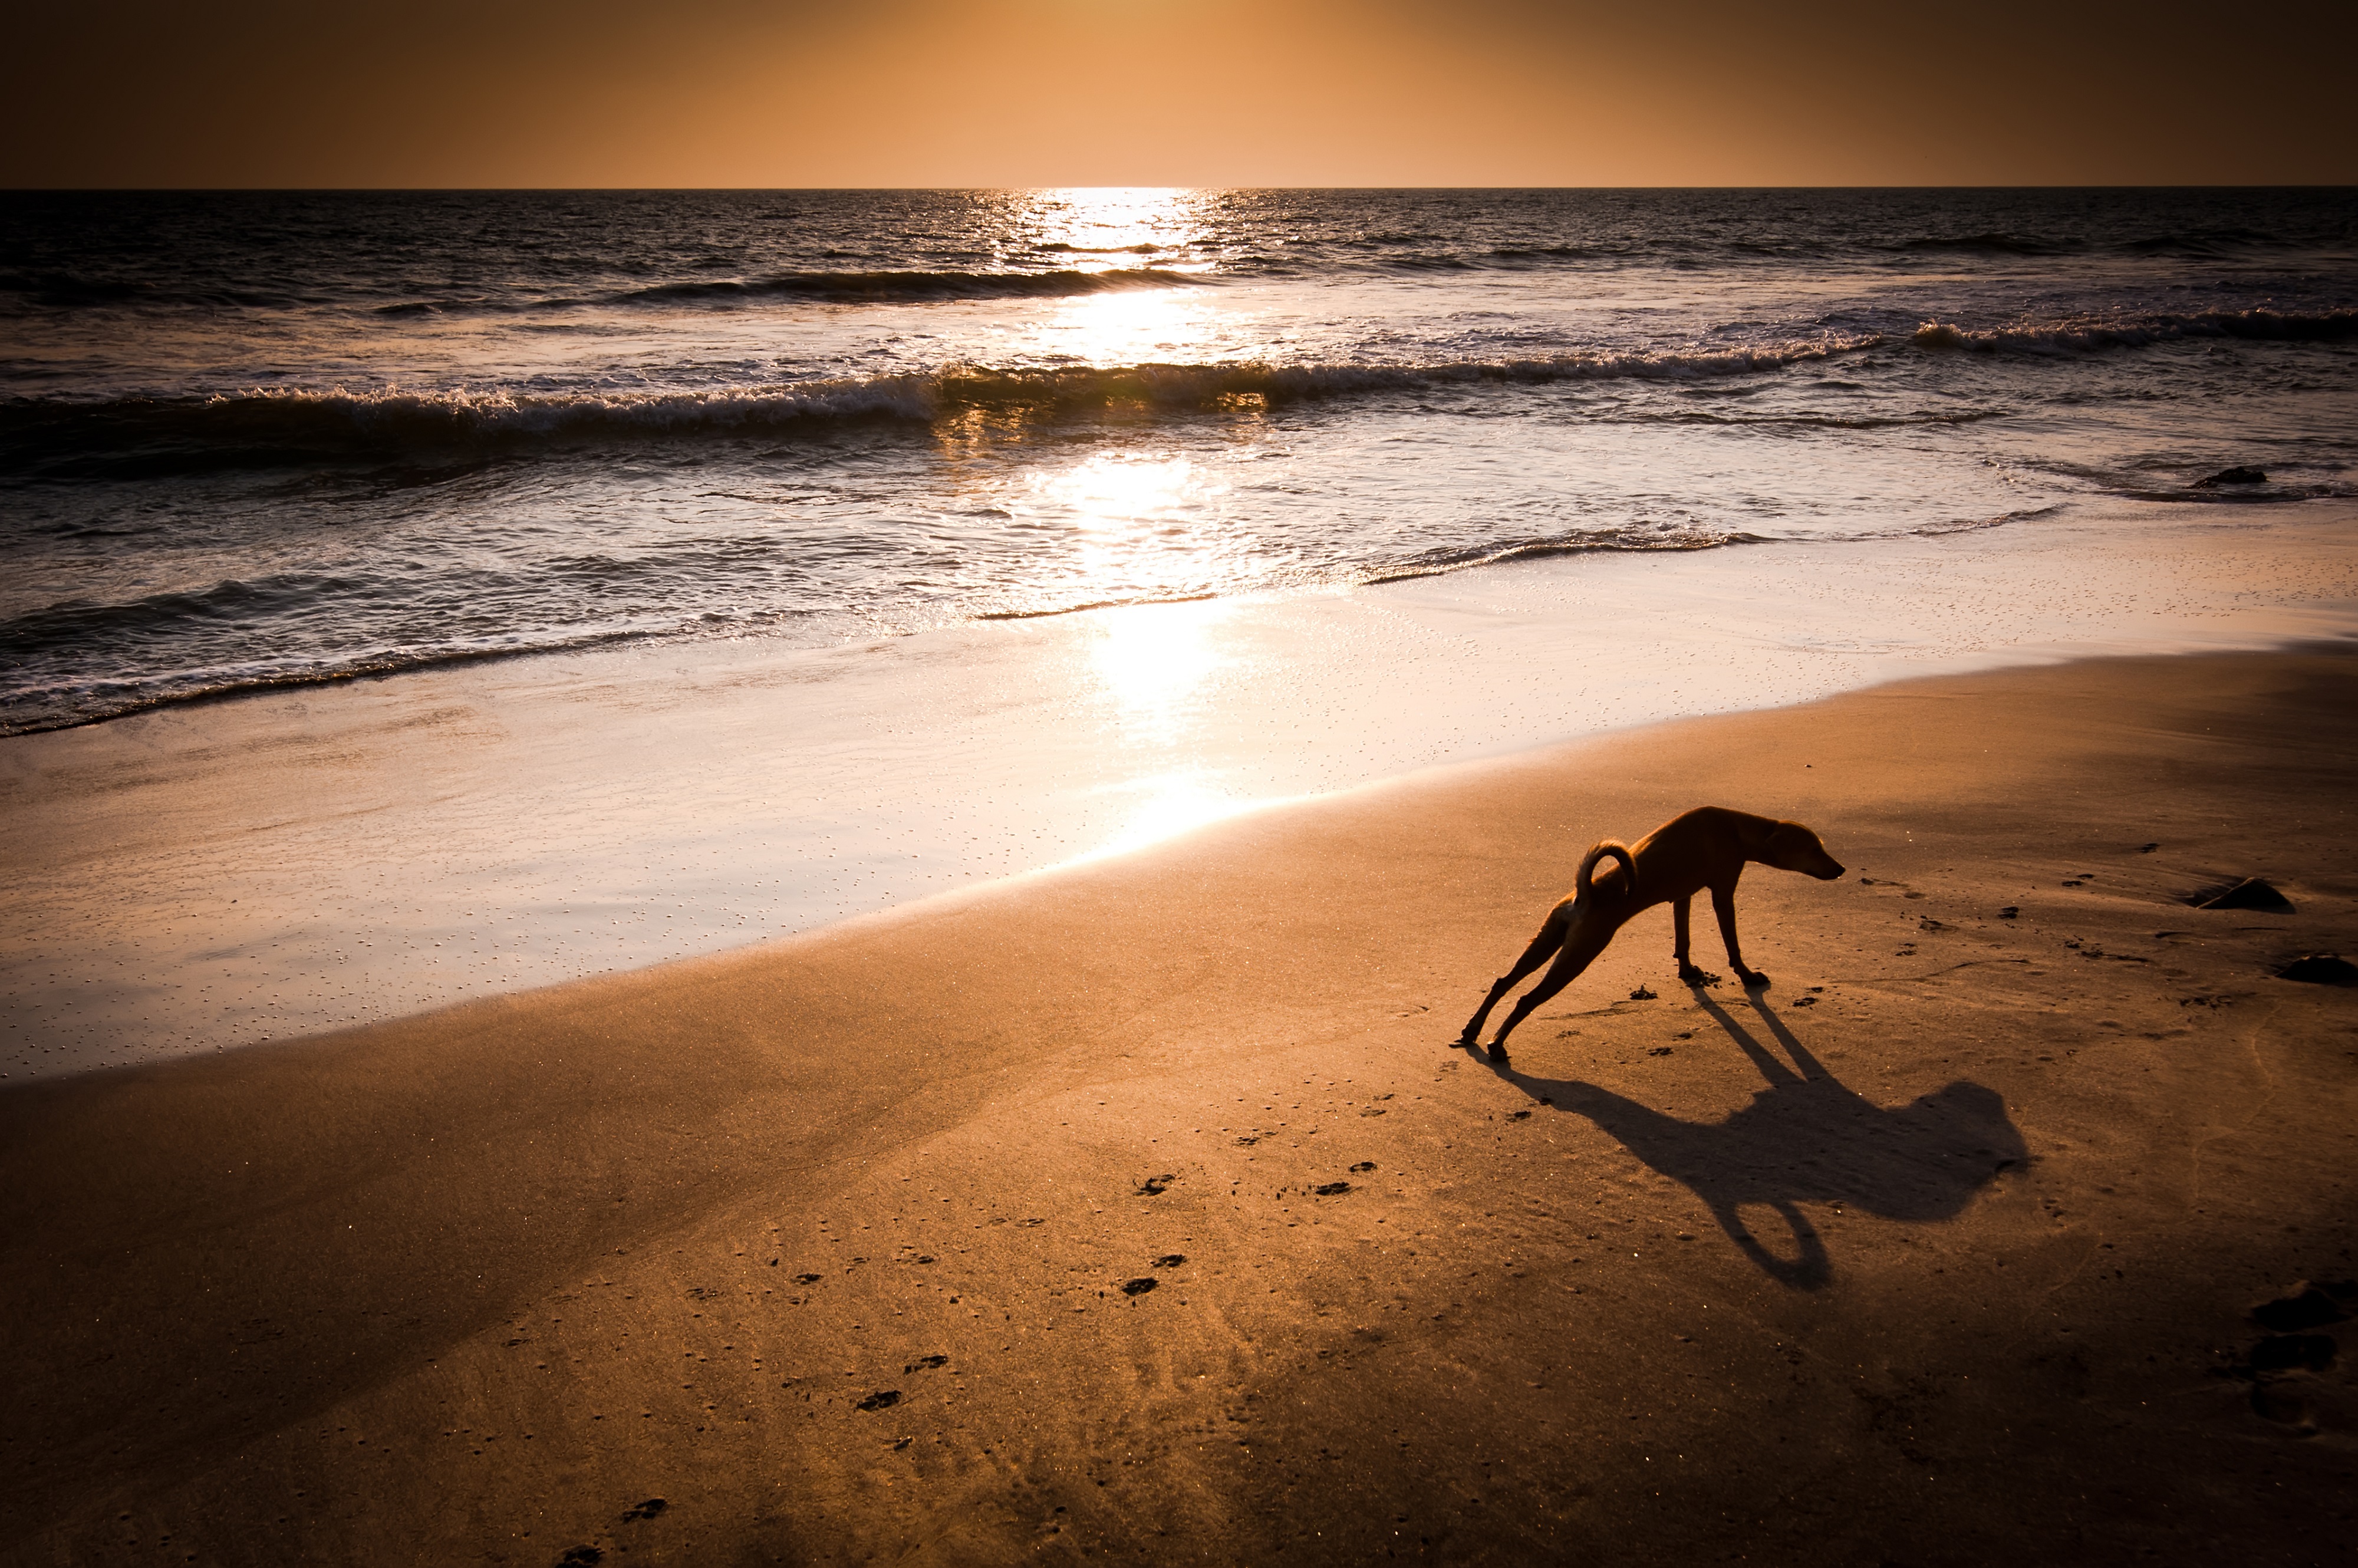 Concept idea of dog yoga. Dog in yoga position Urdhva Mukha Svanasana (Upward Facing Dog) at tropical beach under evening sun. India